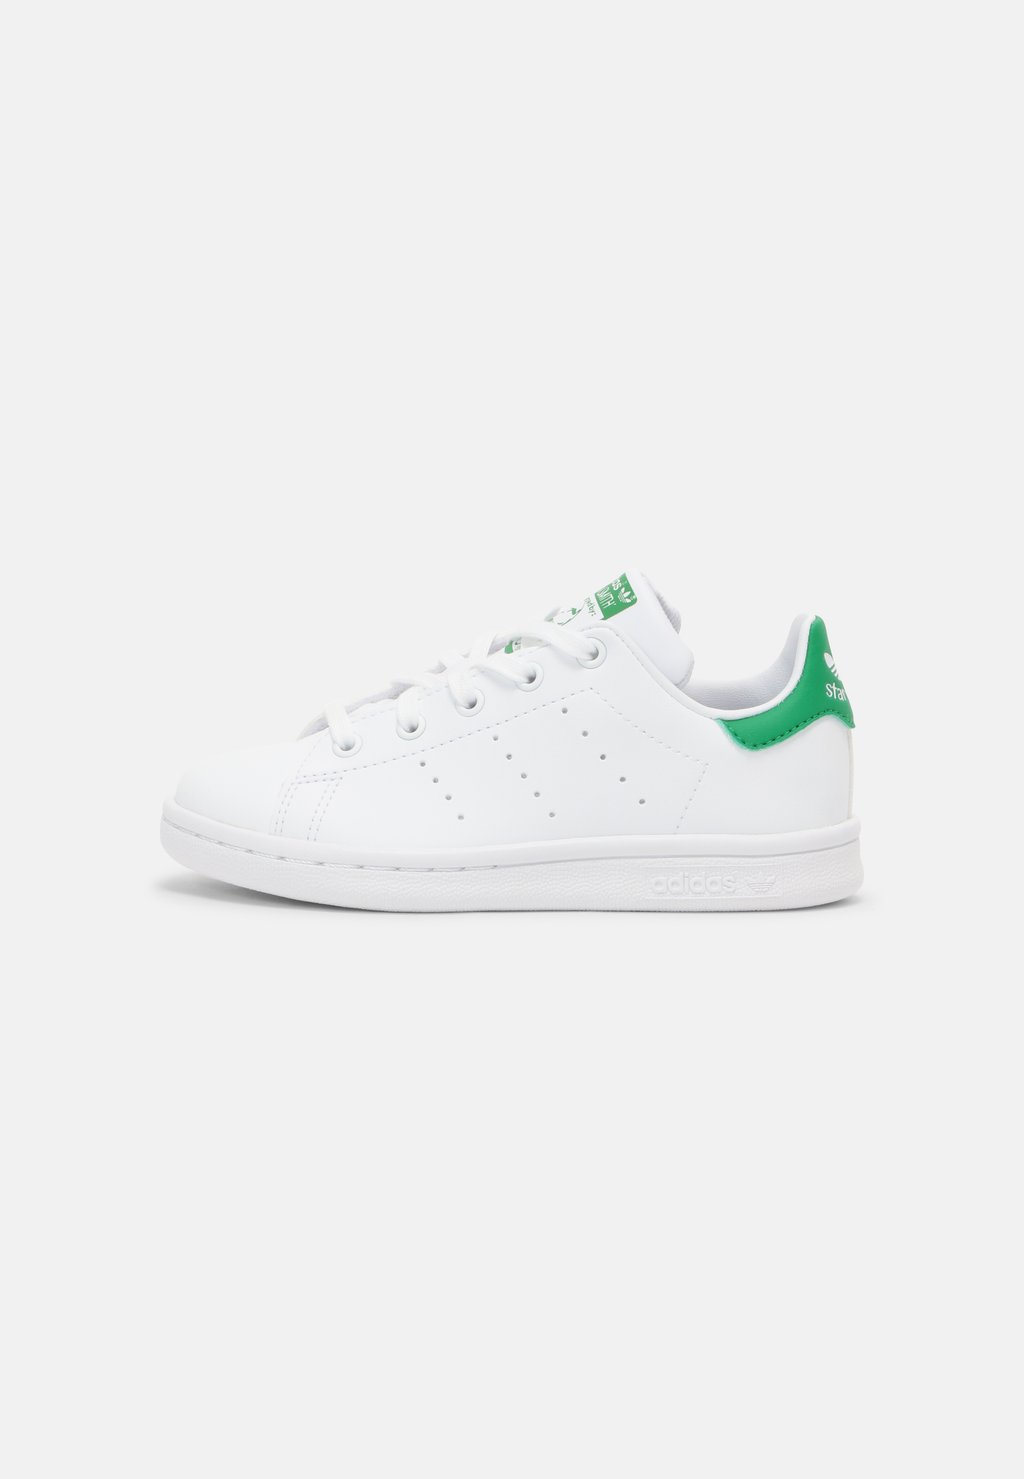 Низкие кроссовки Stan Smith C Unisex adidas Originals, цвет white/green кроссовки adidas originals stan smith unisex white green